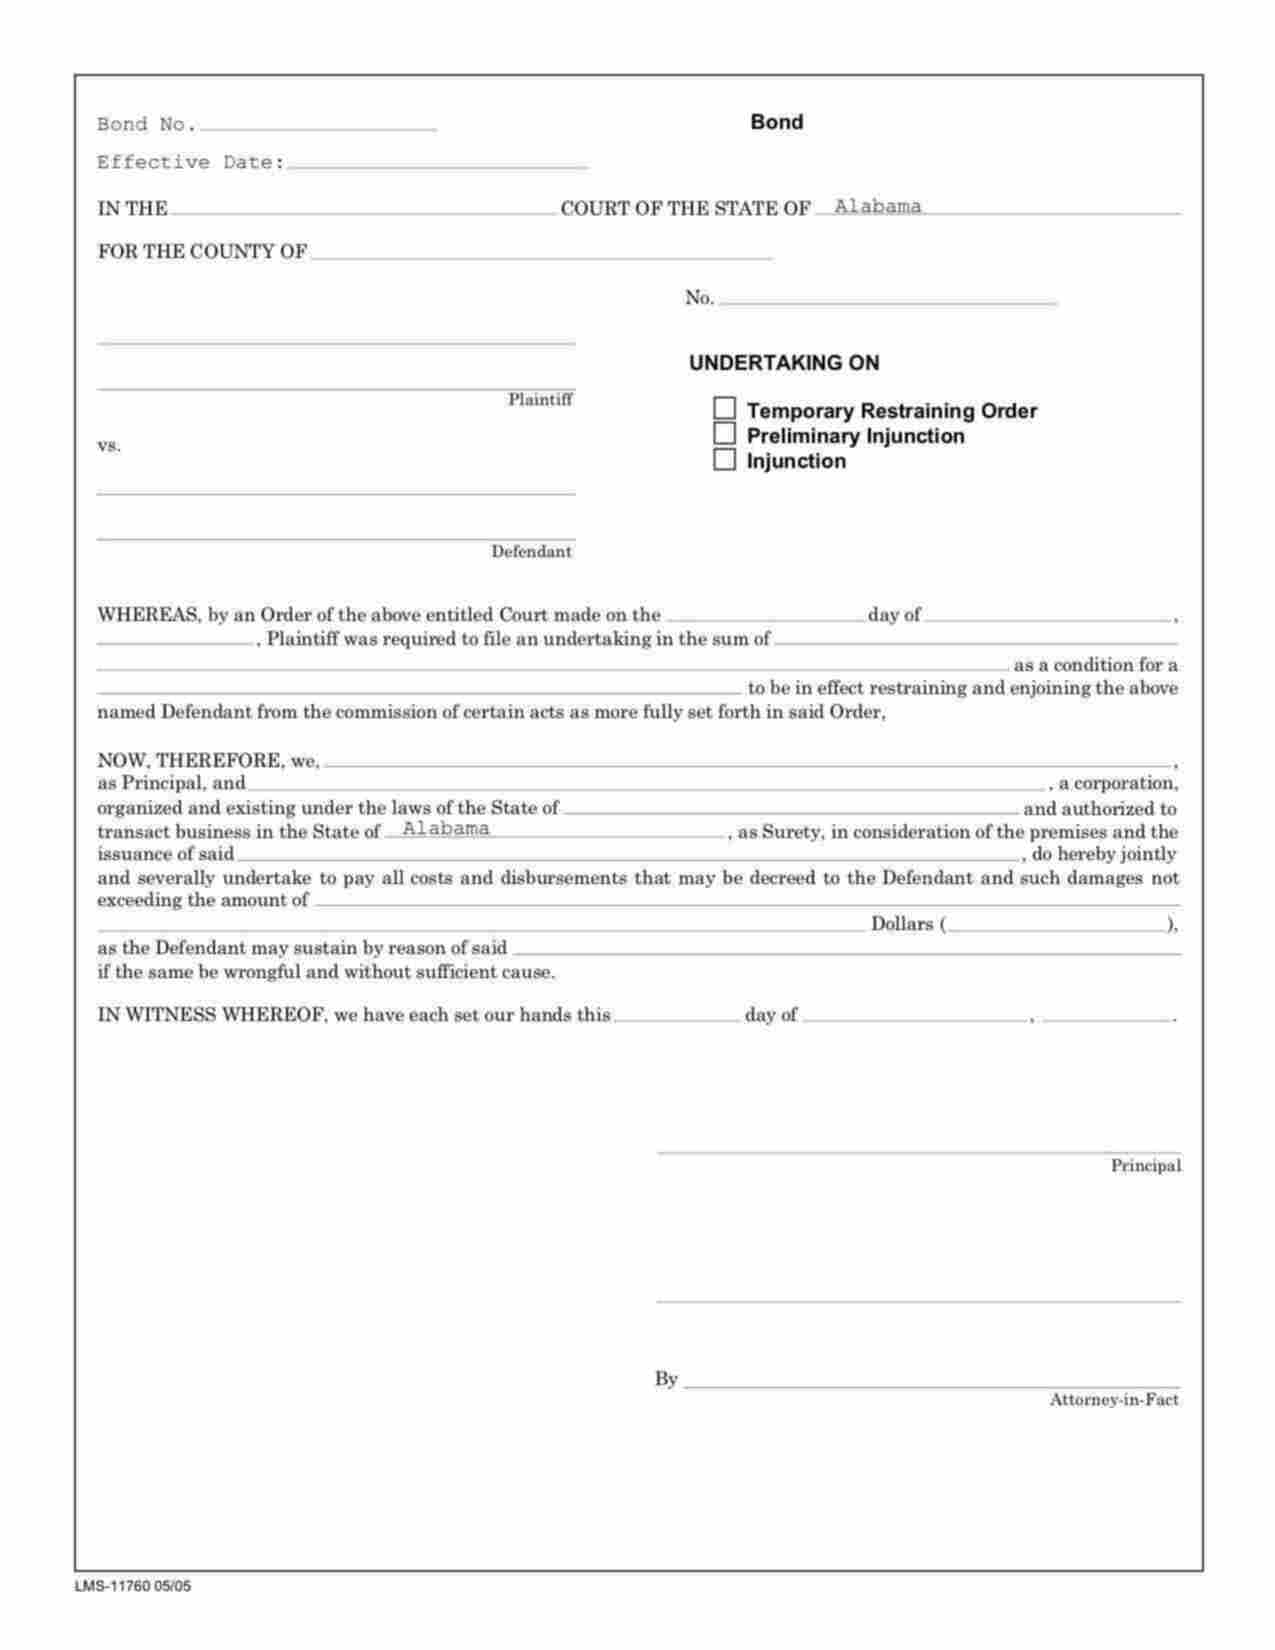 Alabama Preliminary Injunction Bond Form